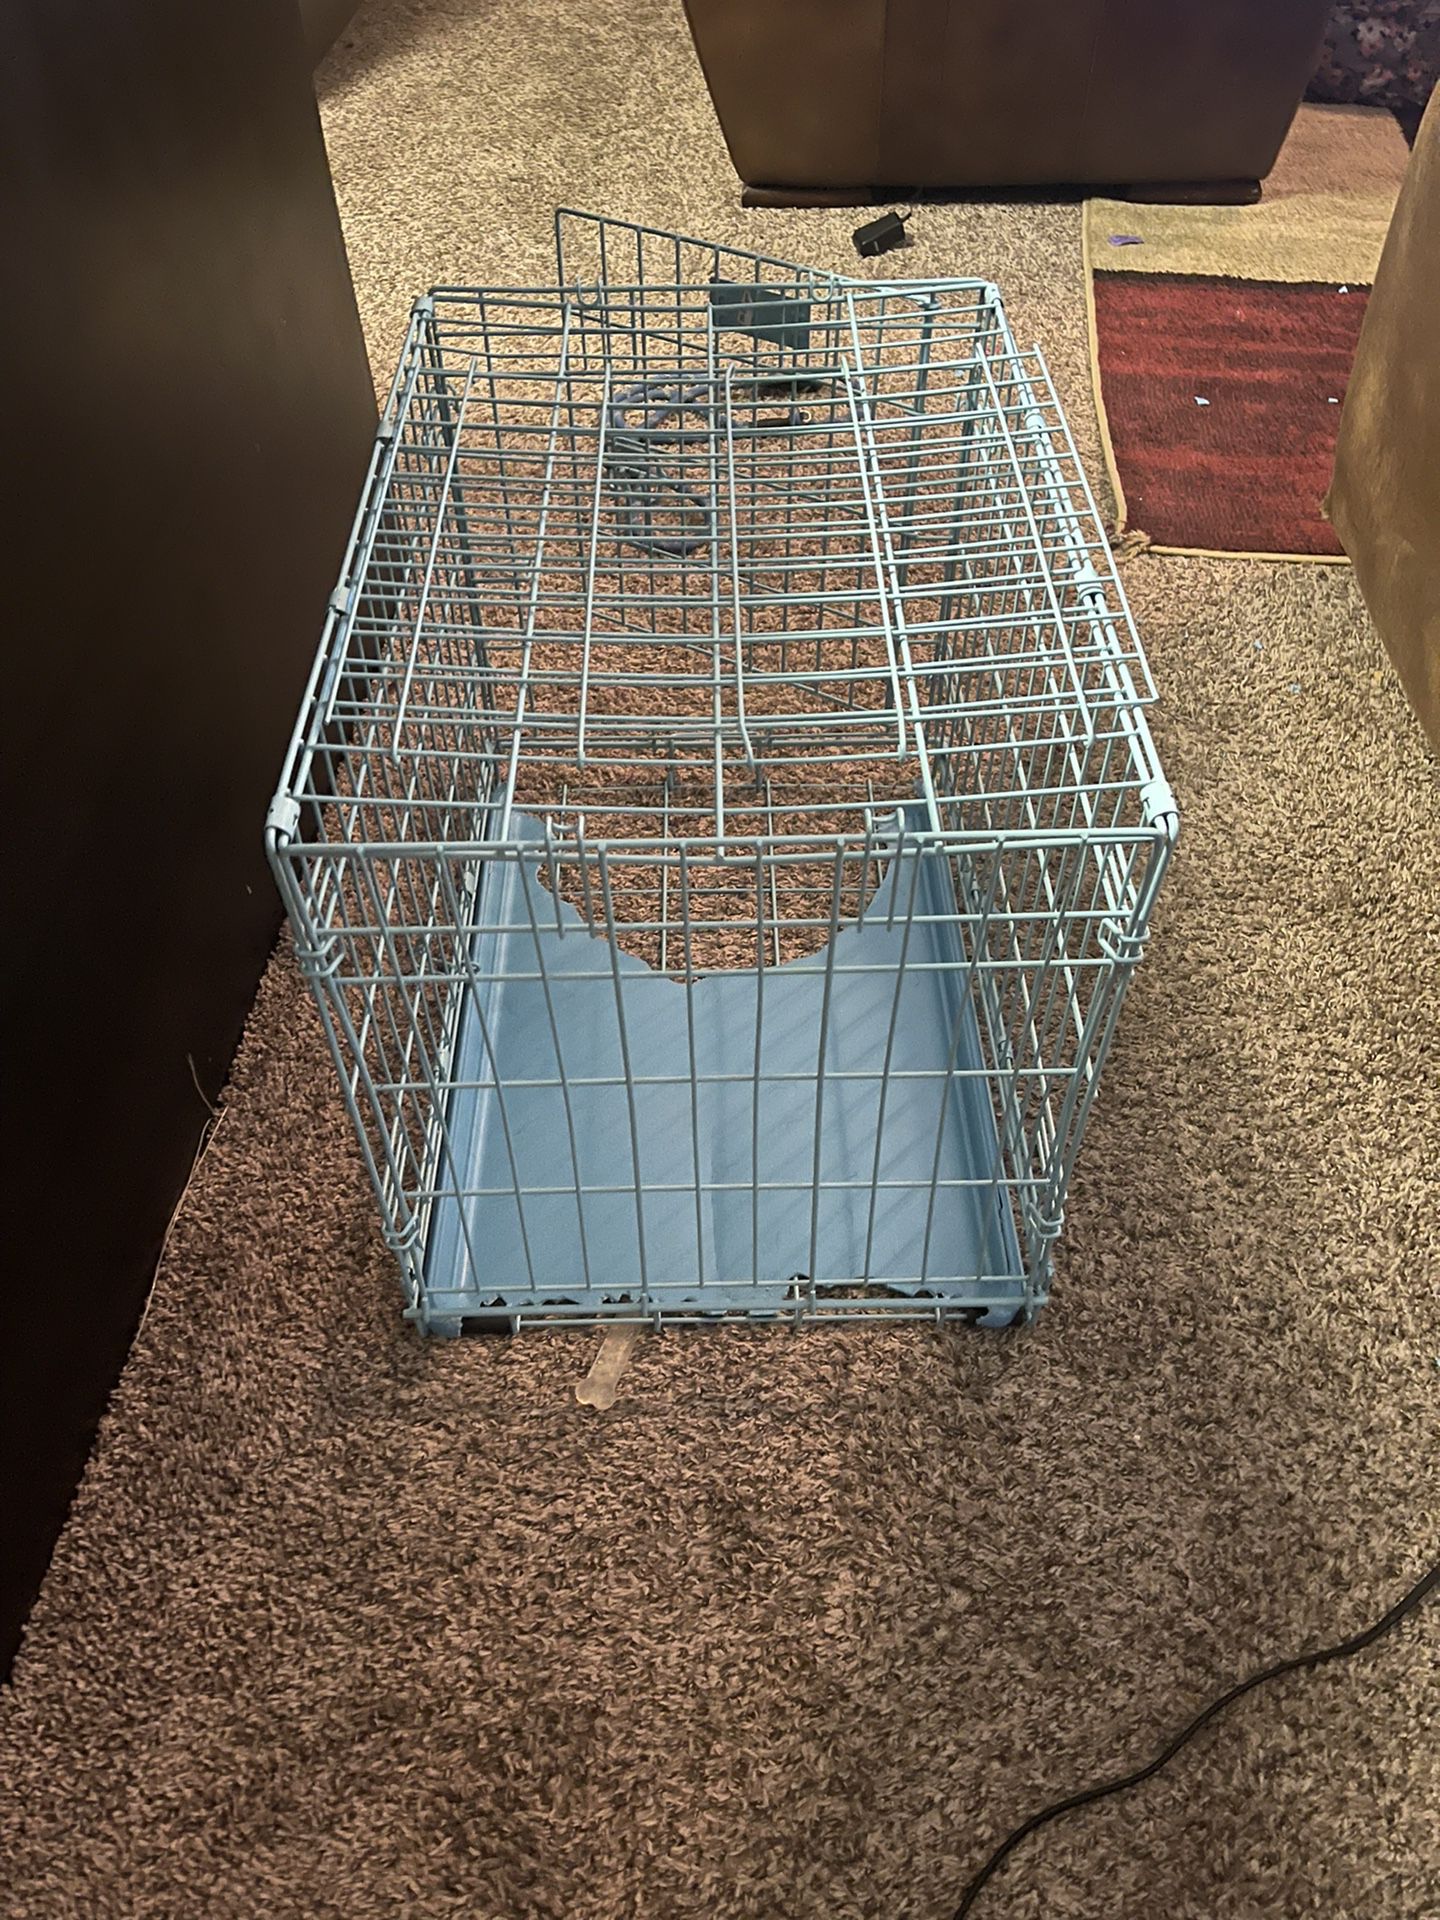 20-25 Pound Dog crate